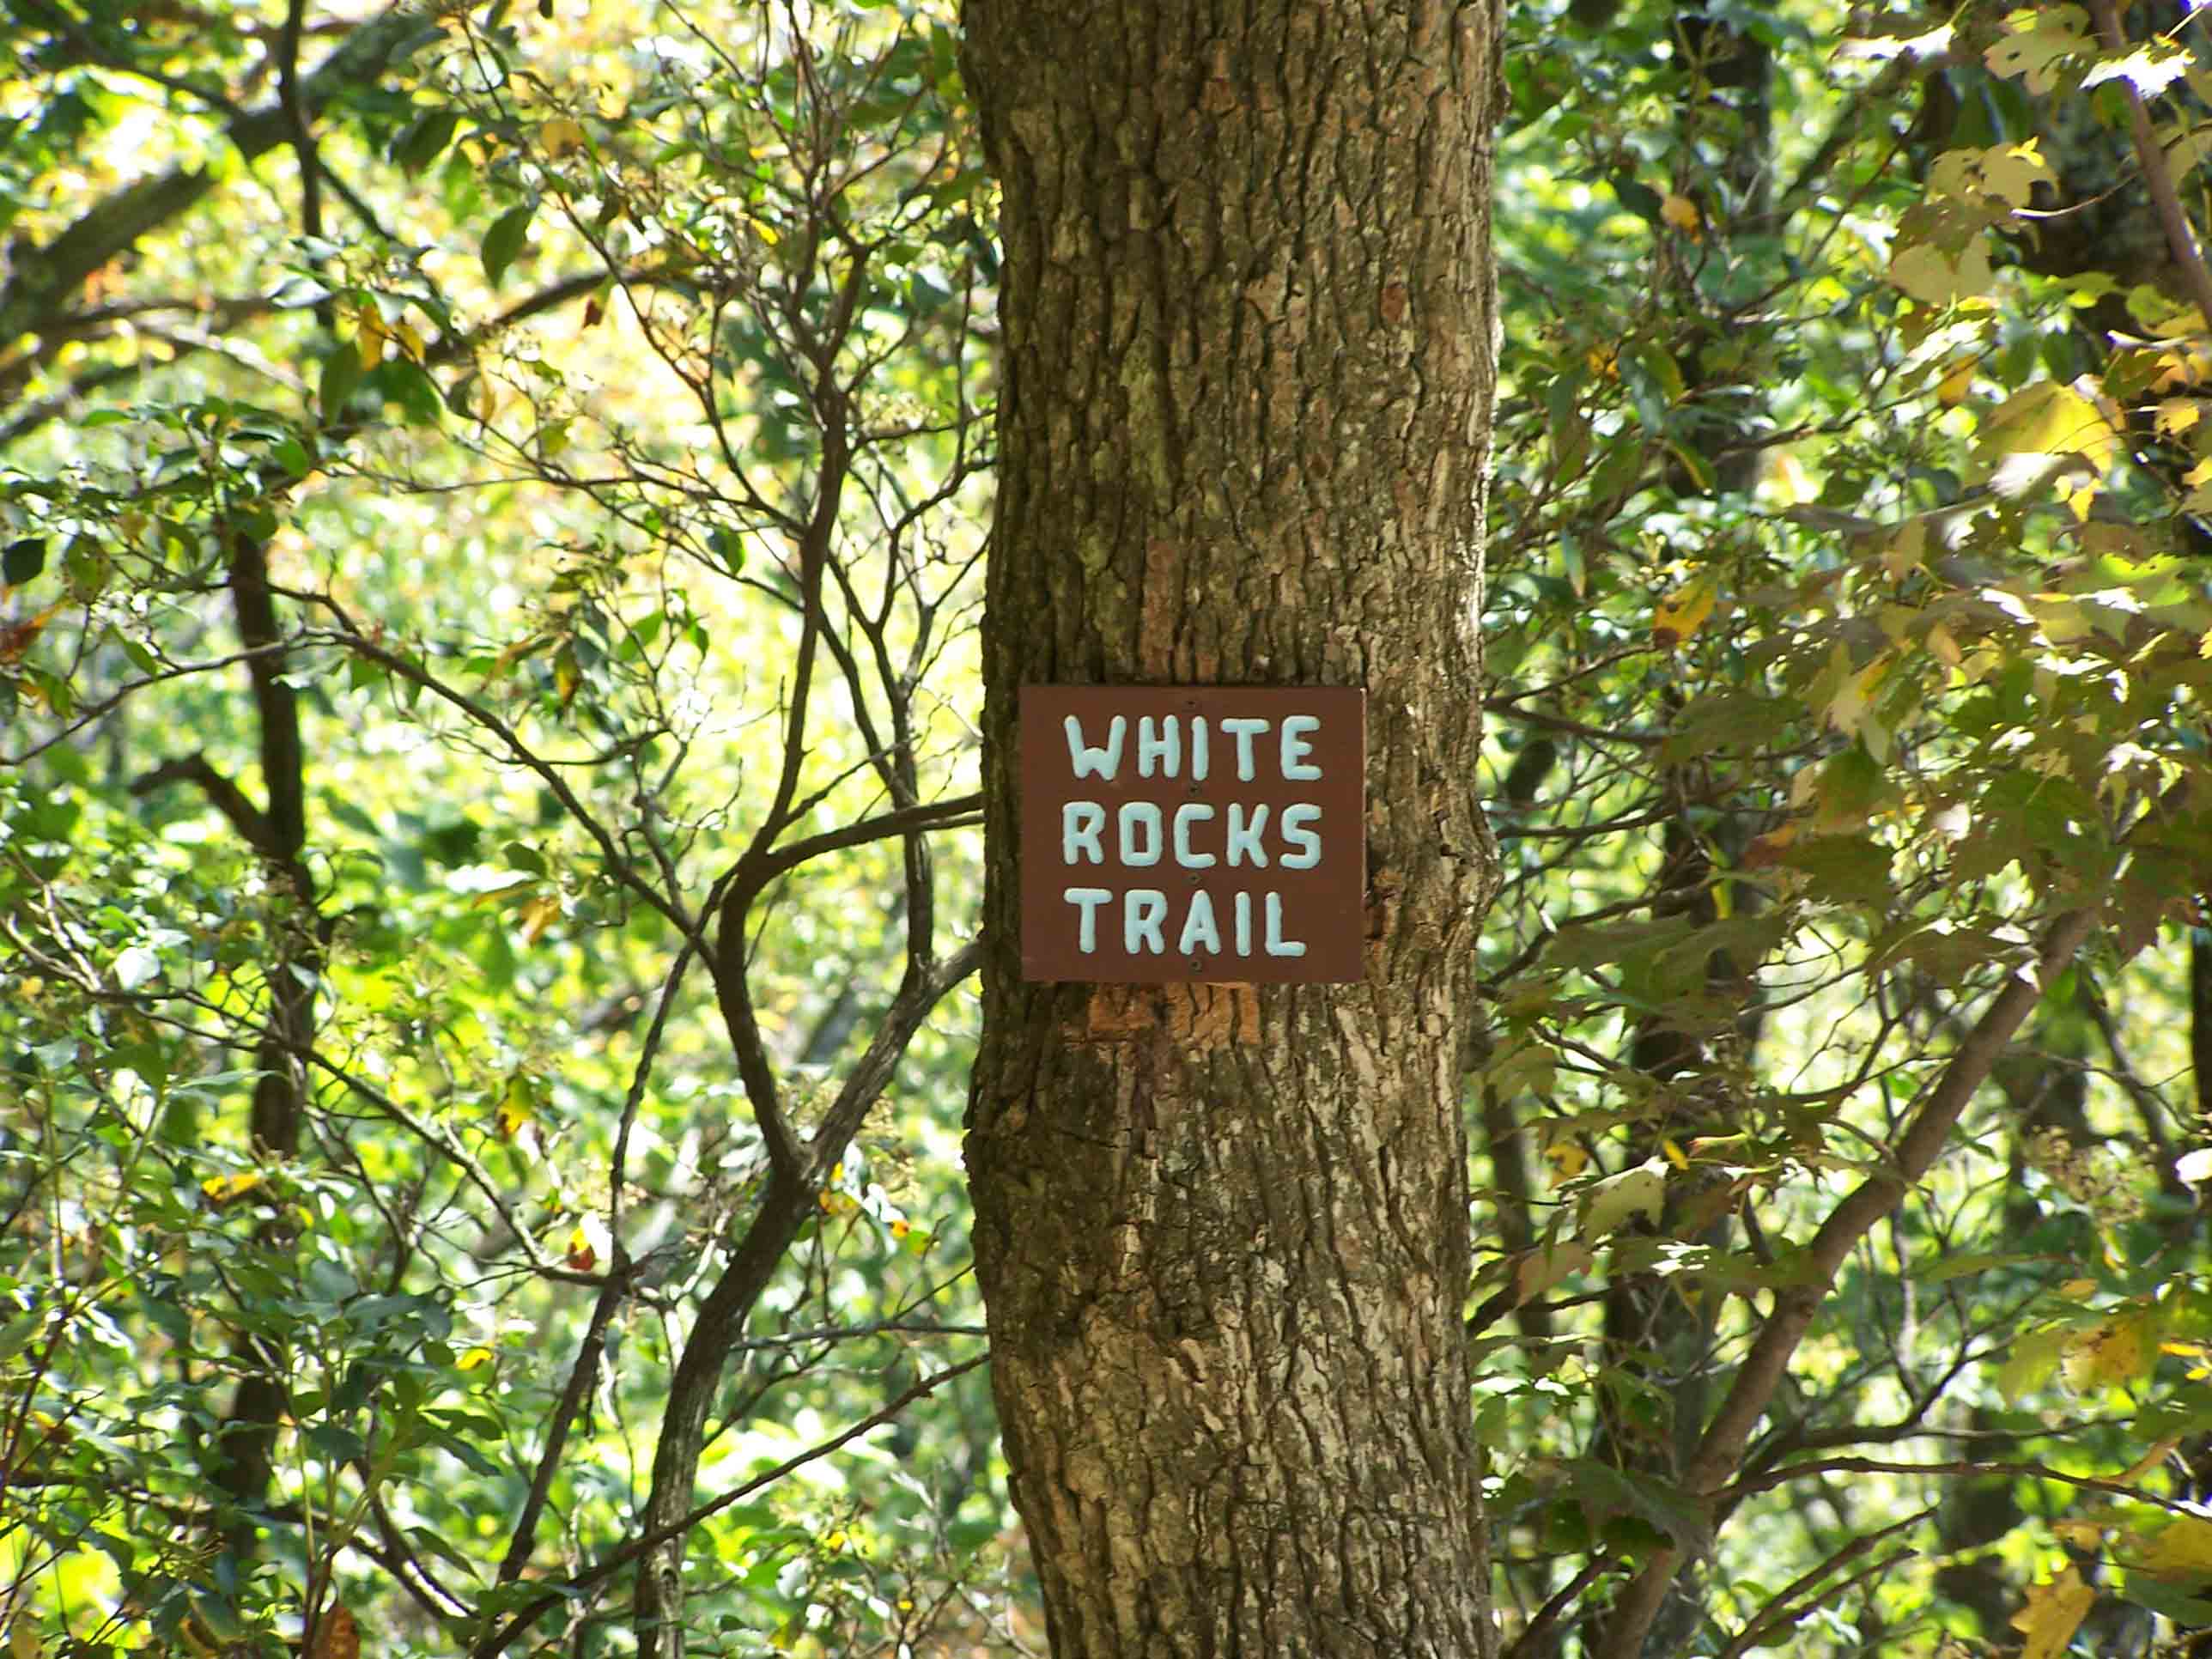 mm 3.8 - Blue-blazed White Rocks Trail. Courtesy at@rohland.org